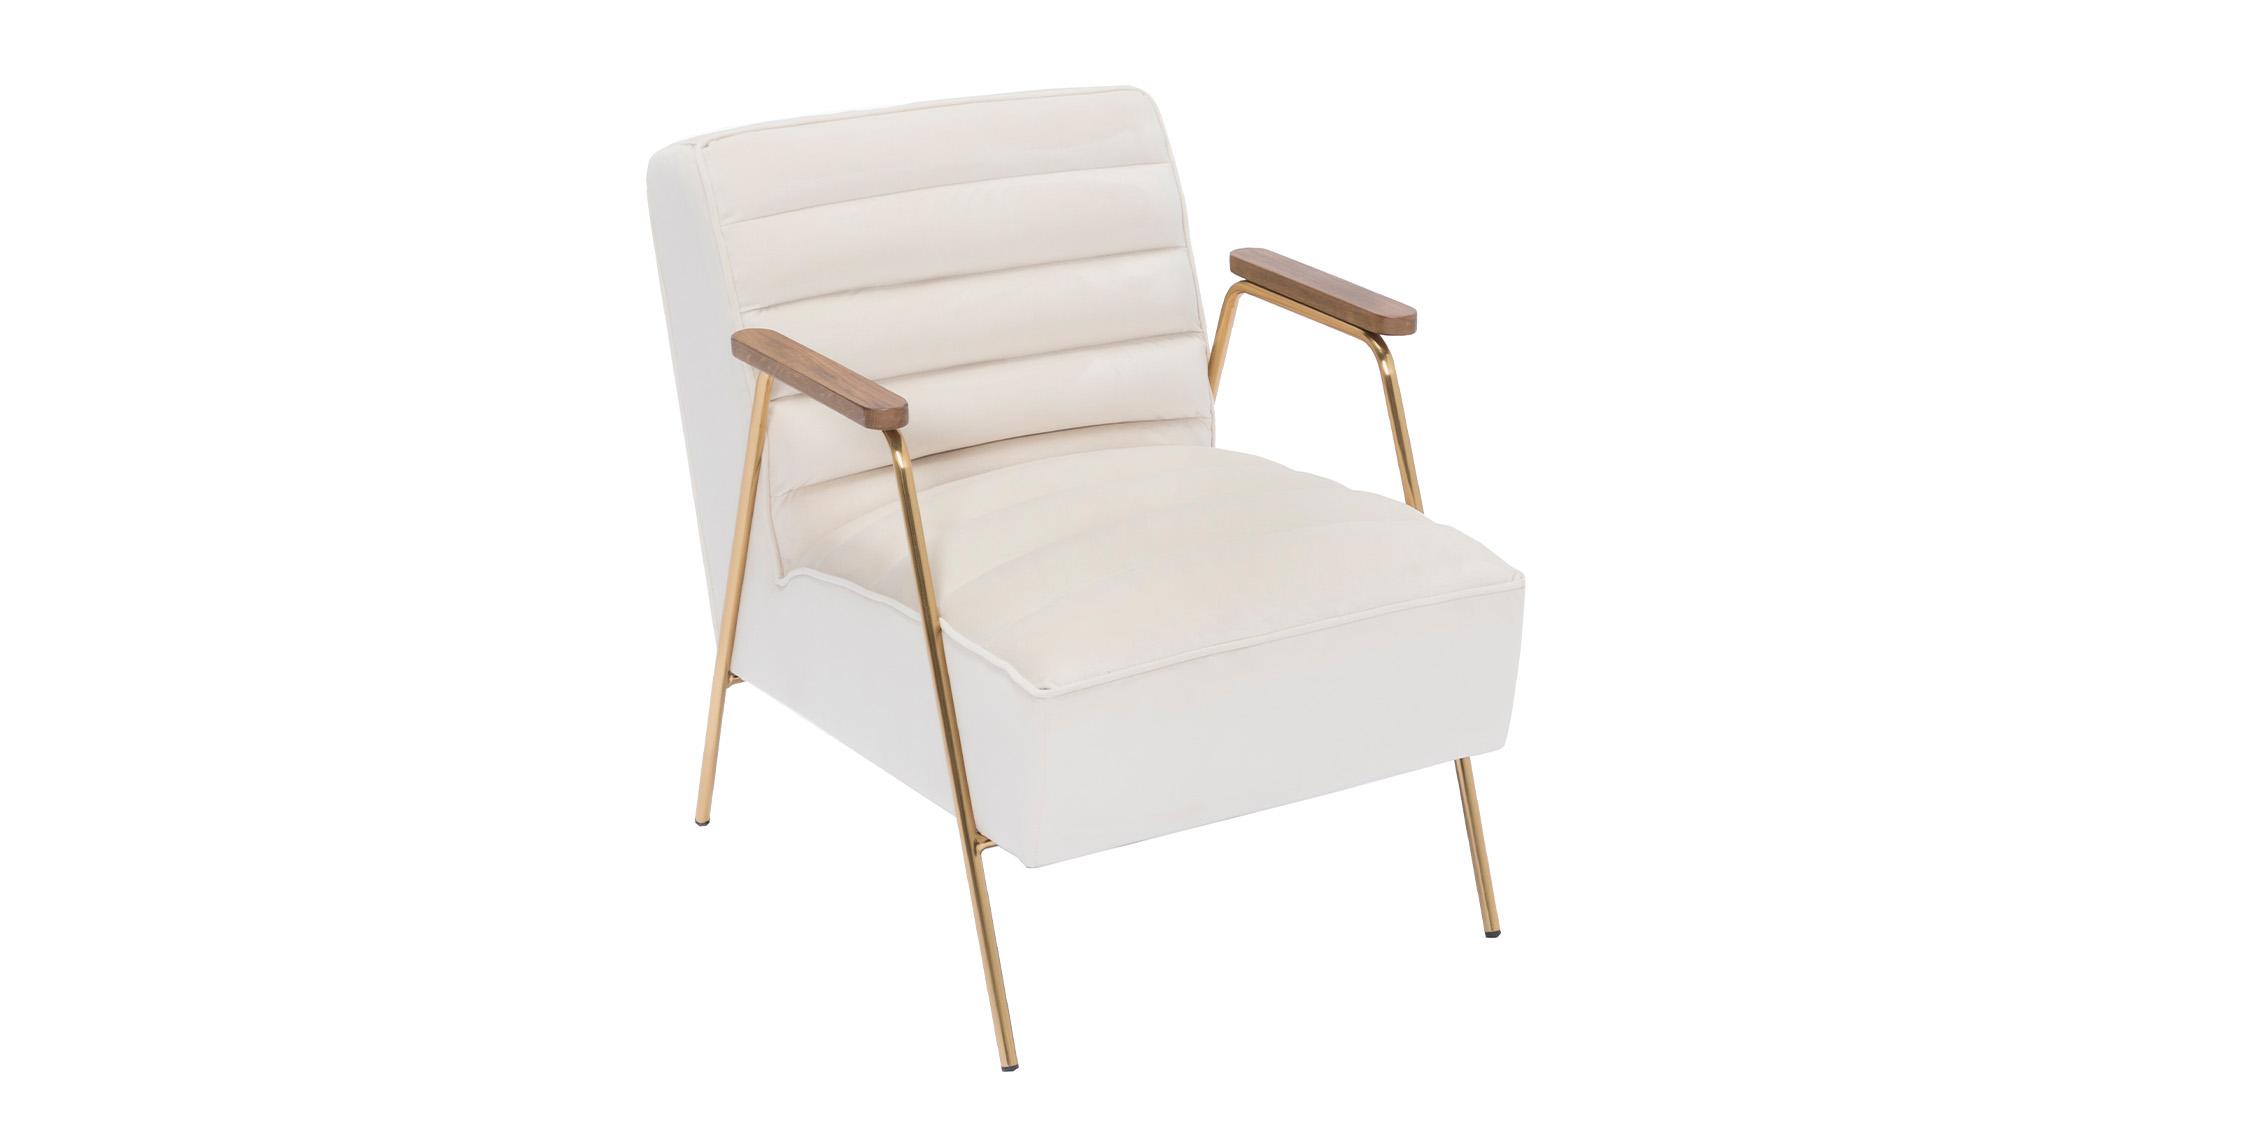 Contemporary, Modern Accent Chair WOODFORD 521Cream 521Cream in Cream, Gold Fabric